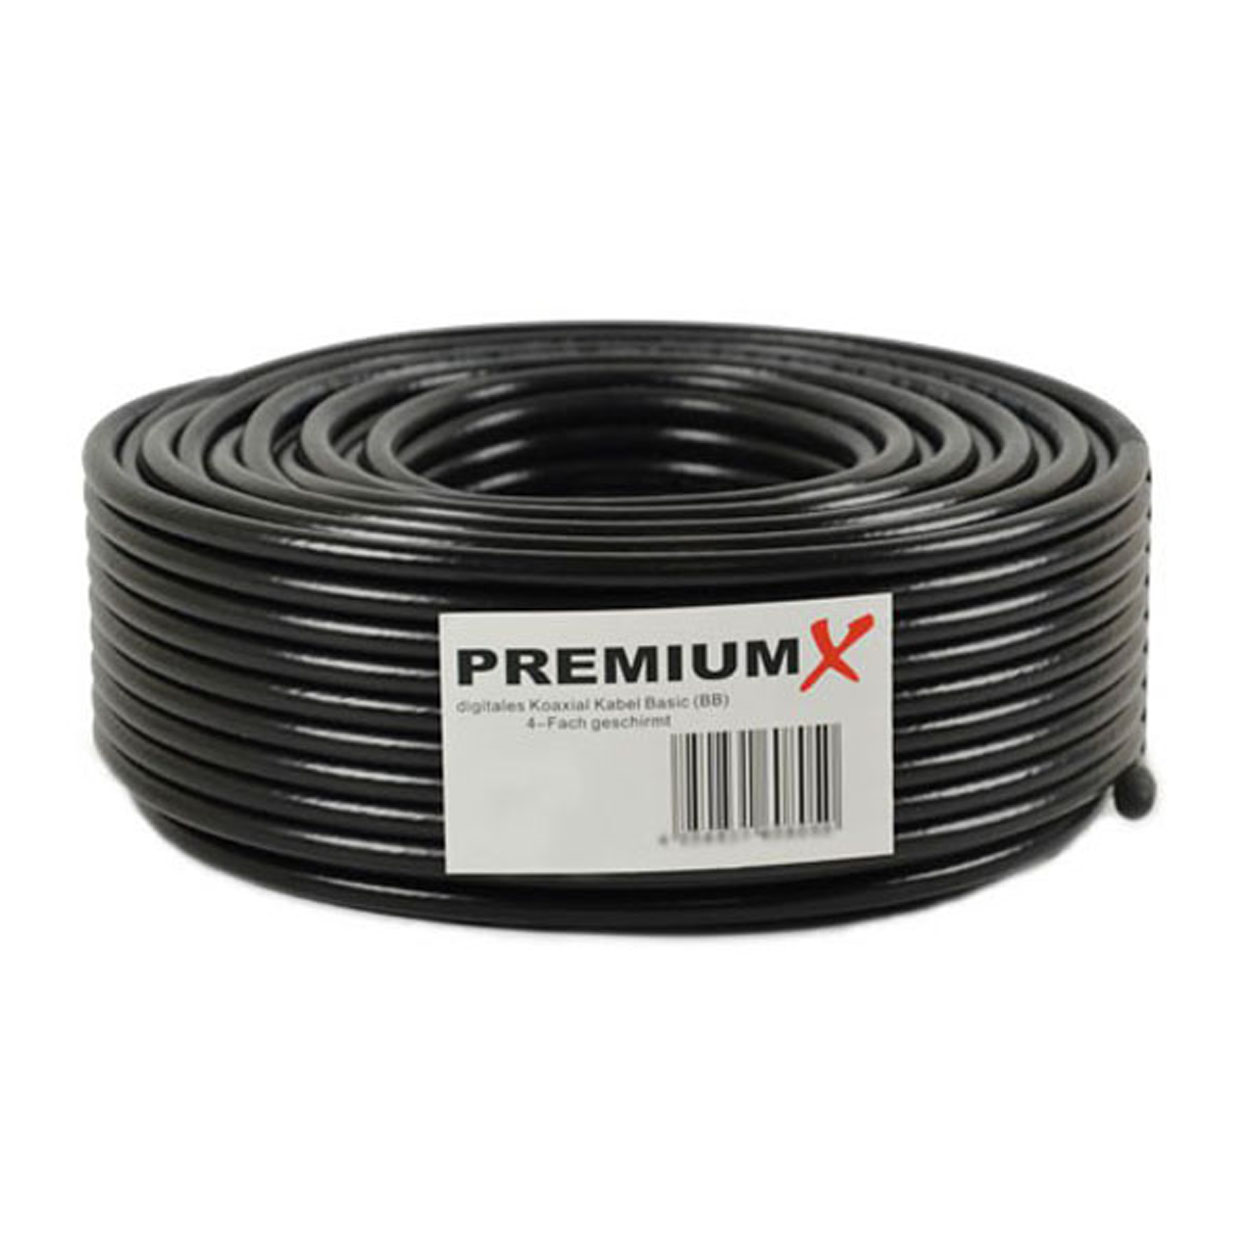 PREMIUMX 50m BASIC Koaxialkabel 135dB 4-fach SAT CCS Antennenkabel Kabel schwarz